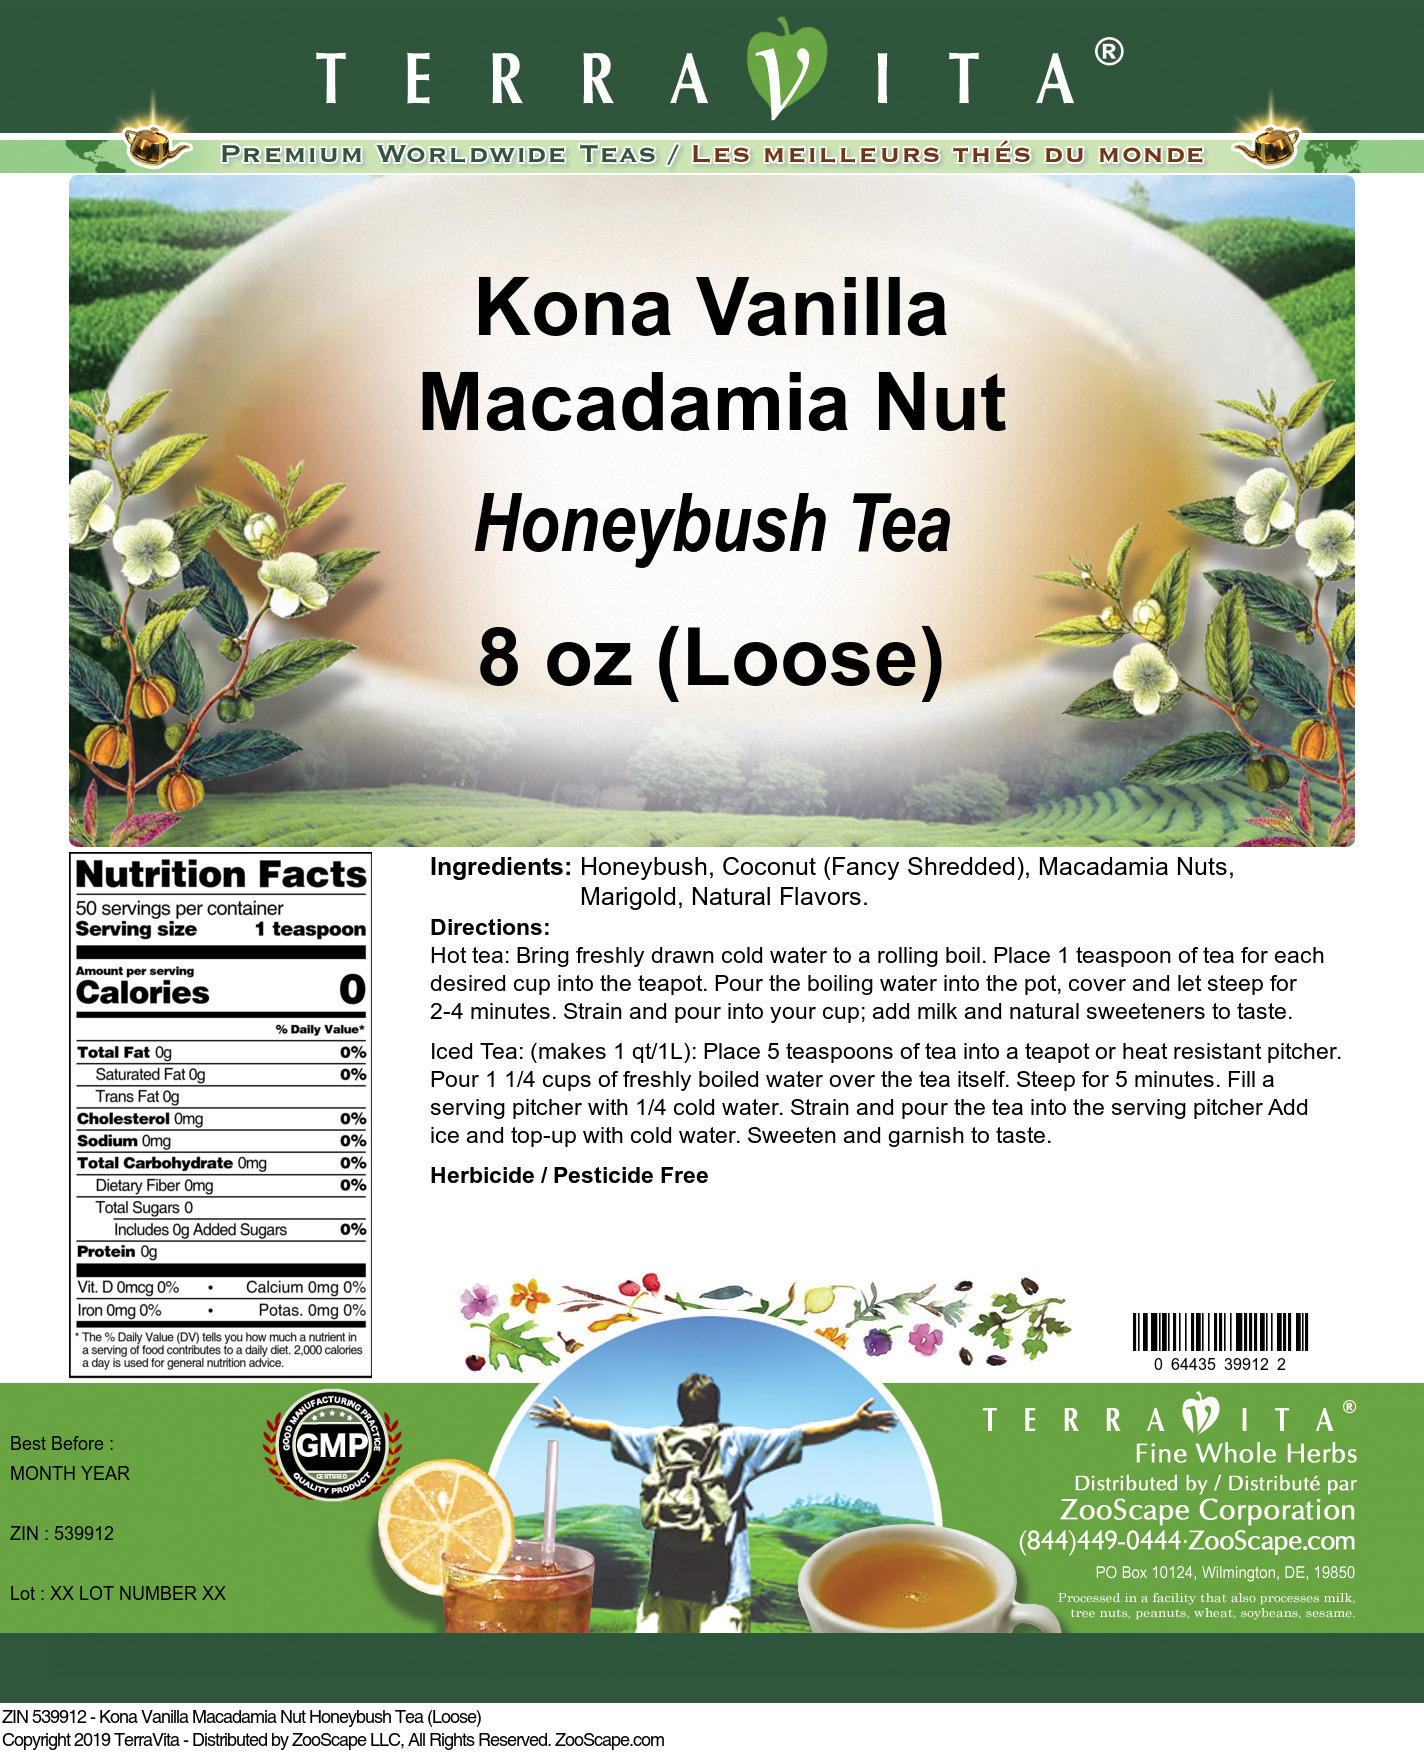 Kona Vanilla Macadamia Nut Honeybush Tea (Loose) - Label